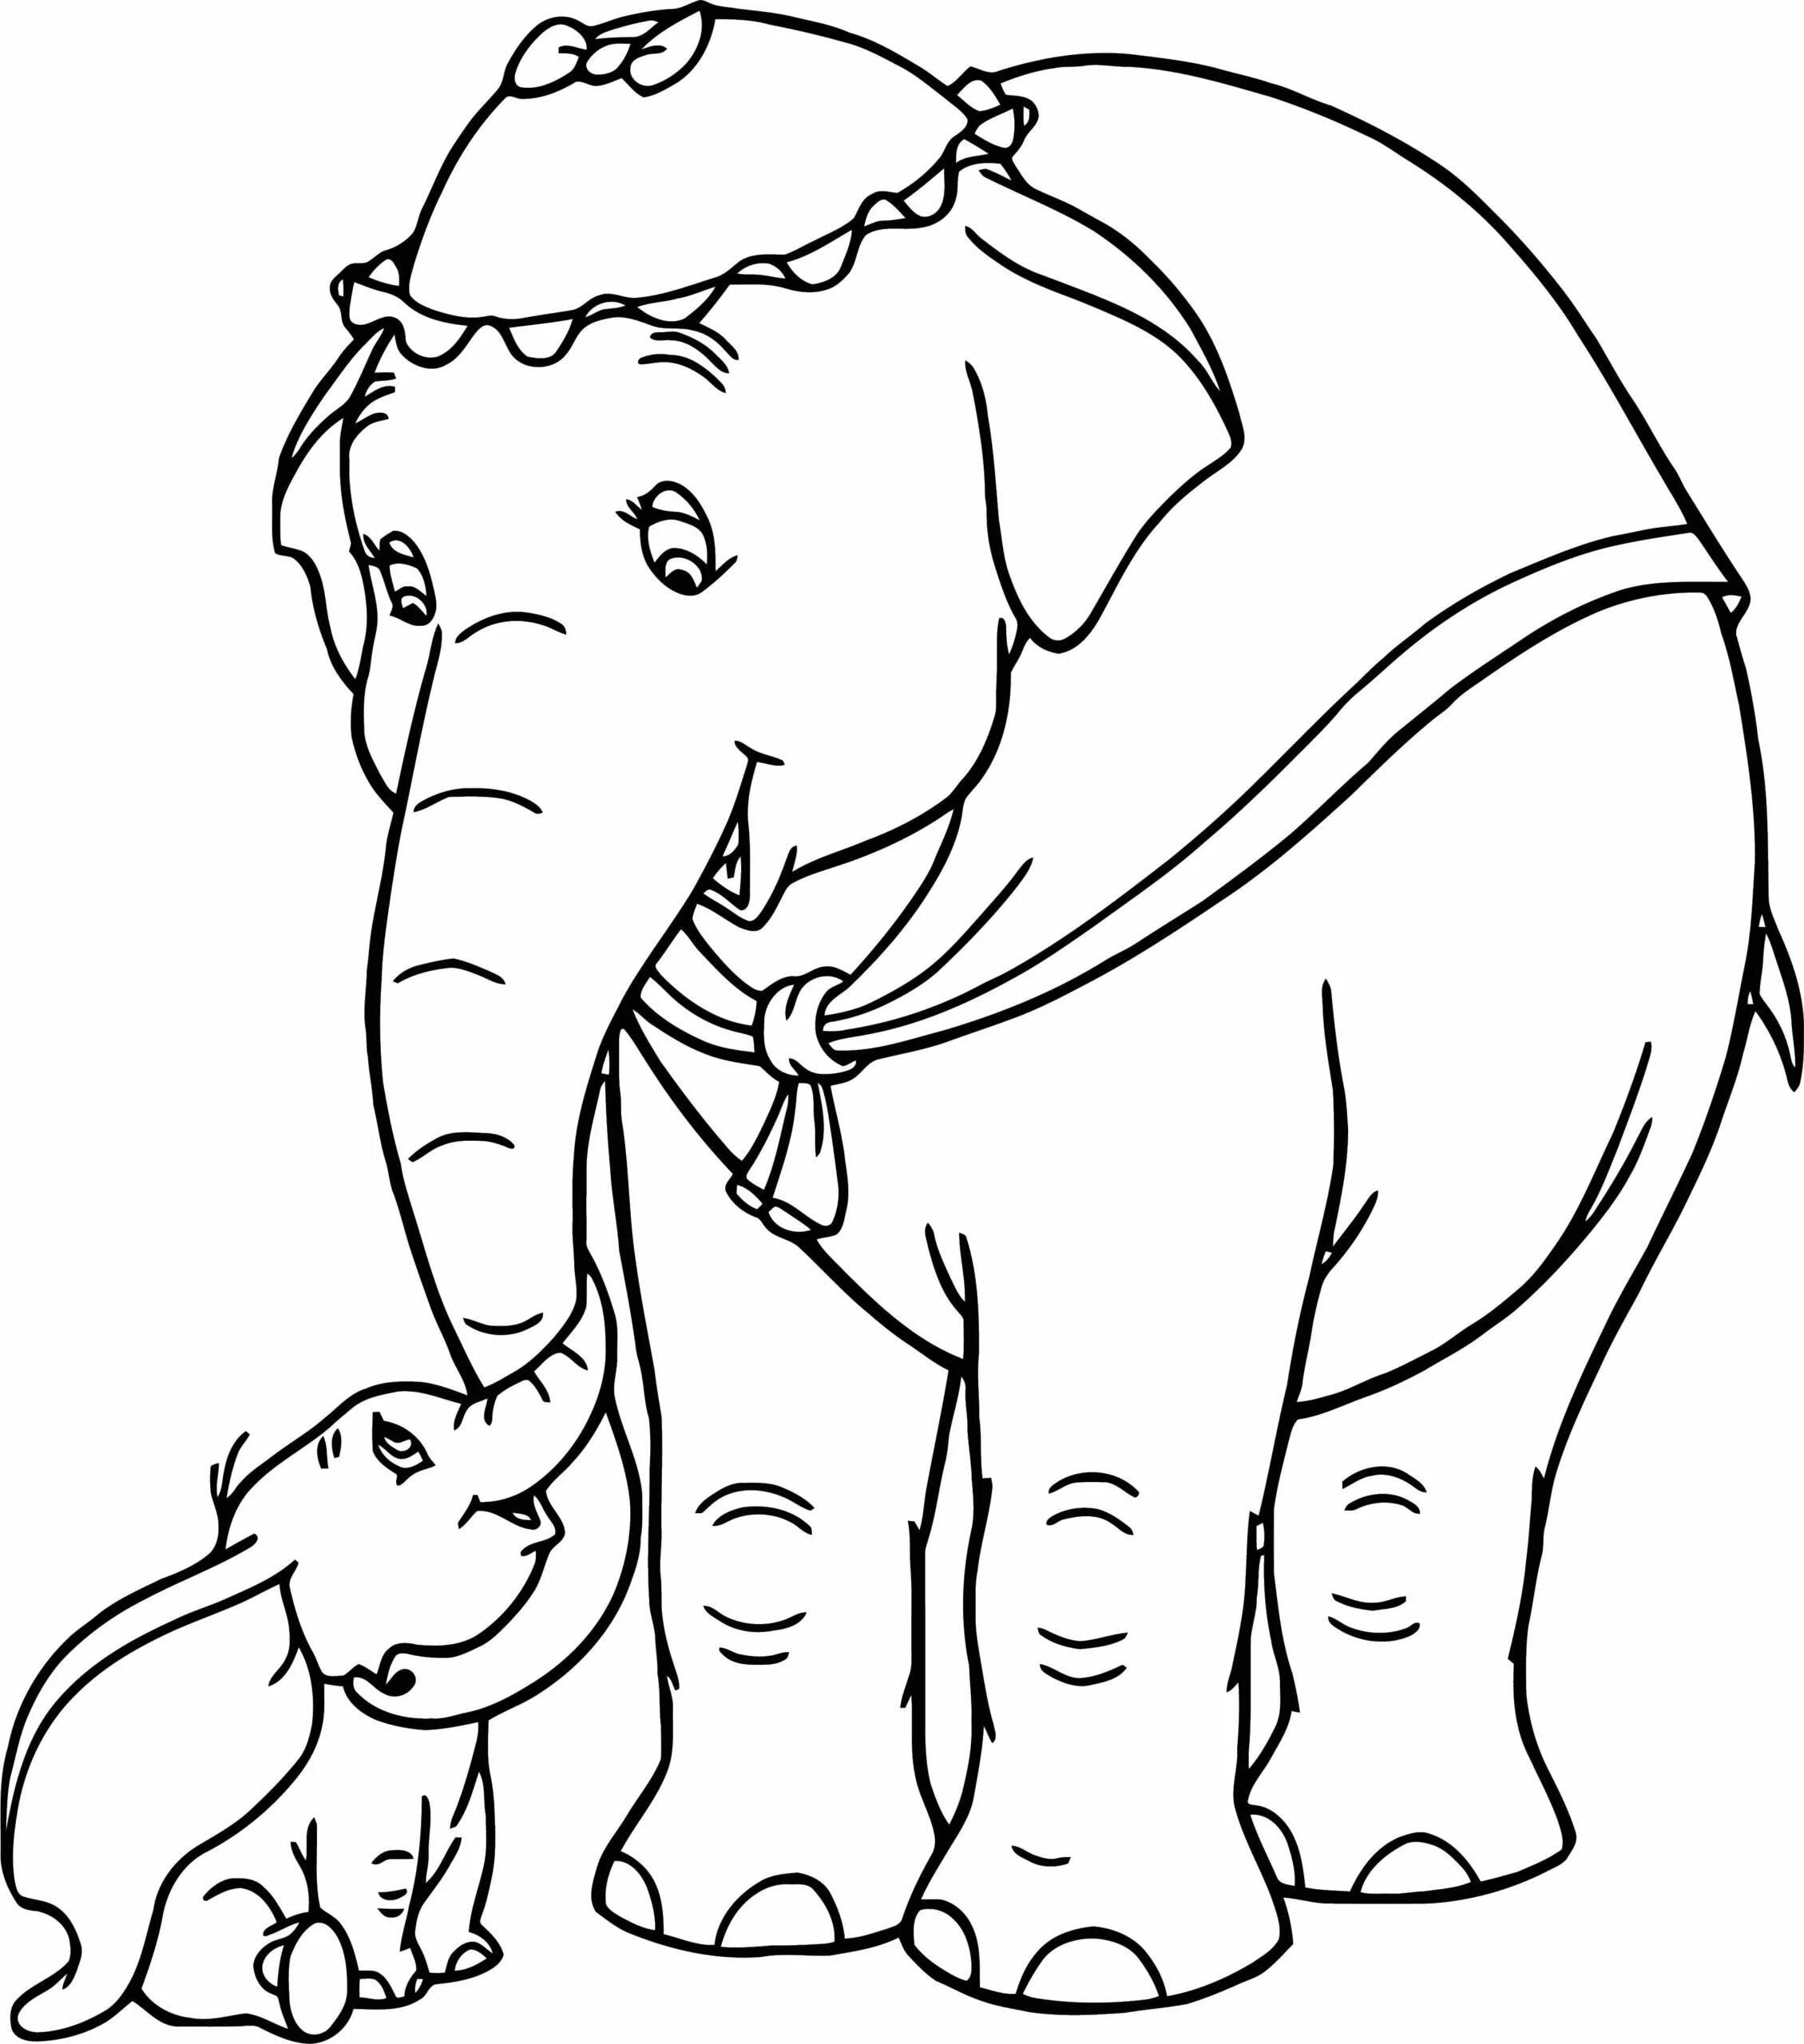 Wonderful elephant coloring book